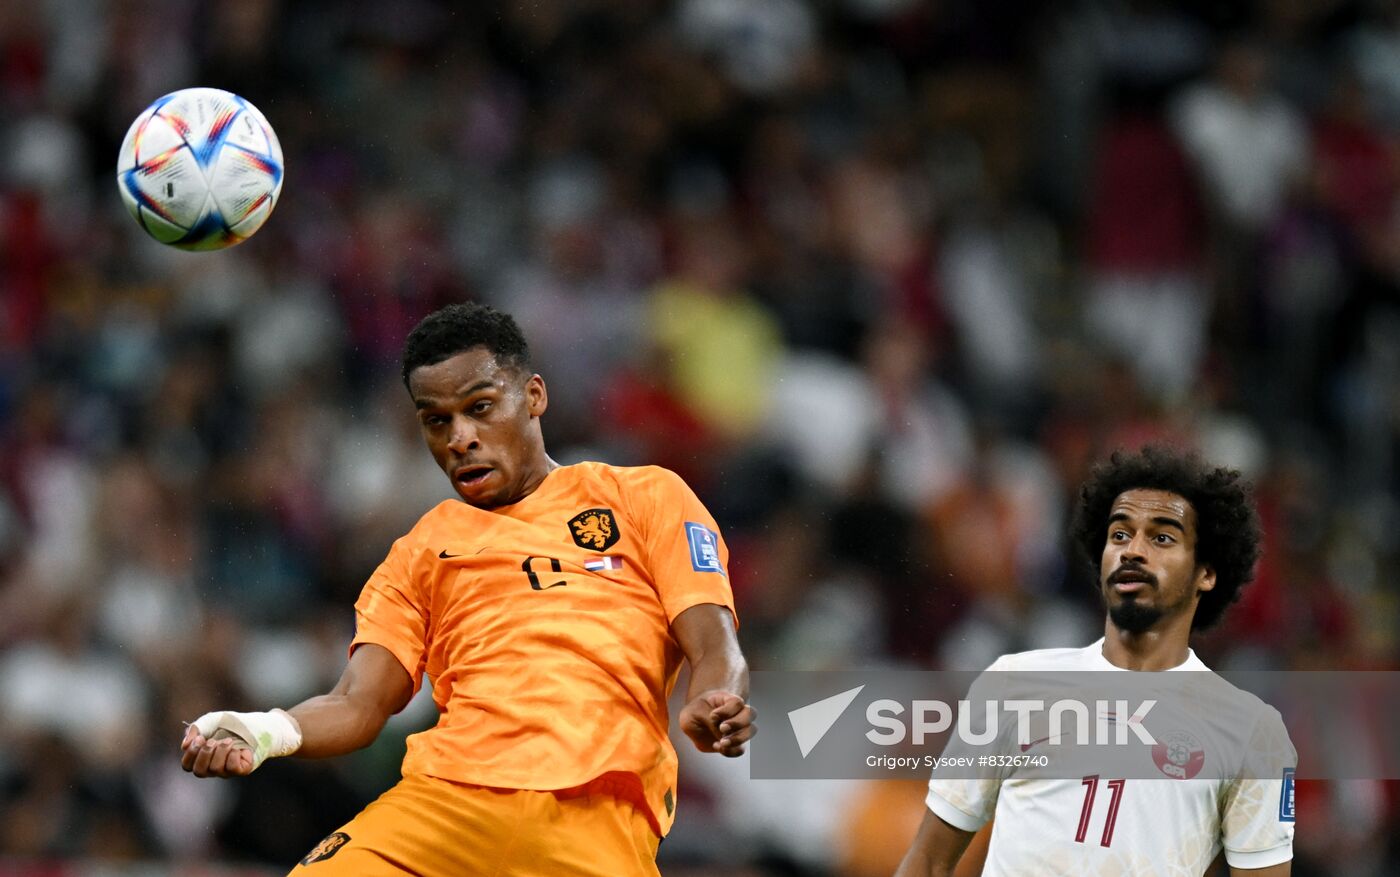 Qatar Soccer World Cup Netherlands - Qatar